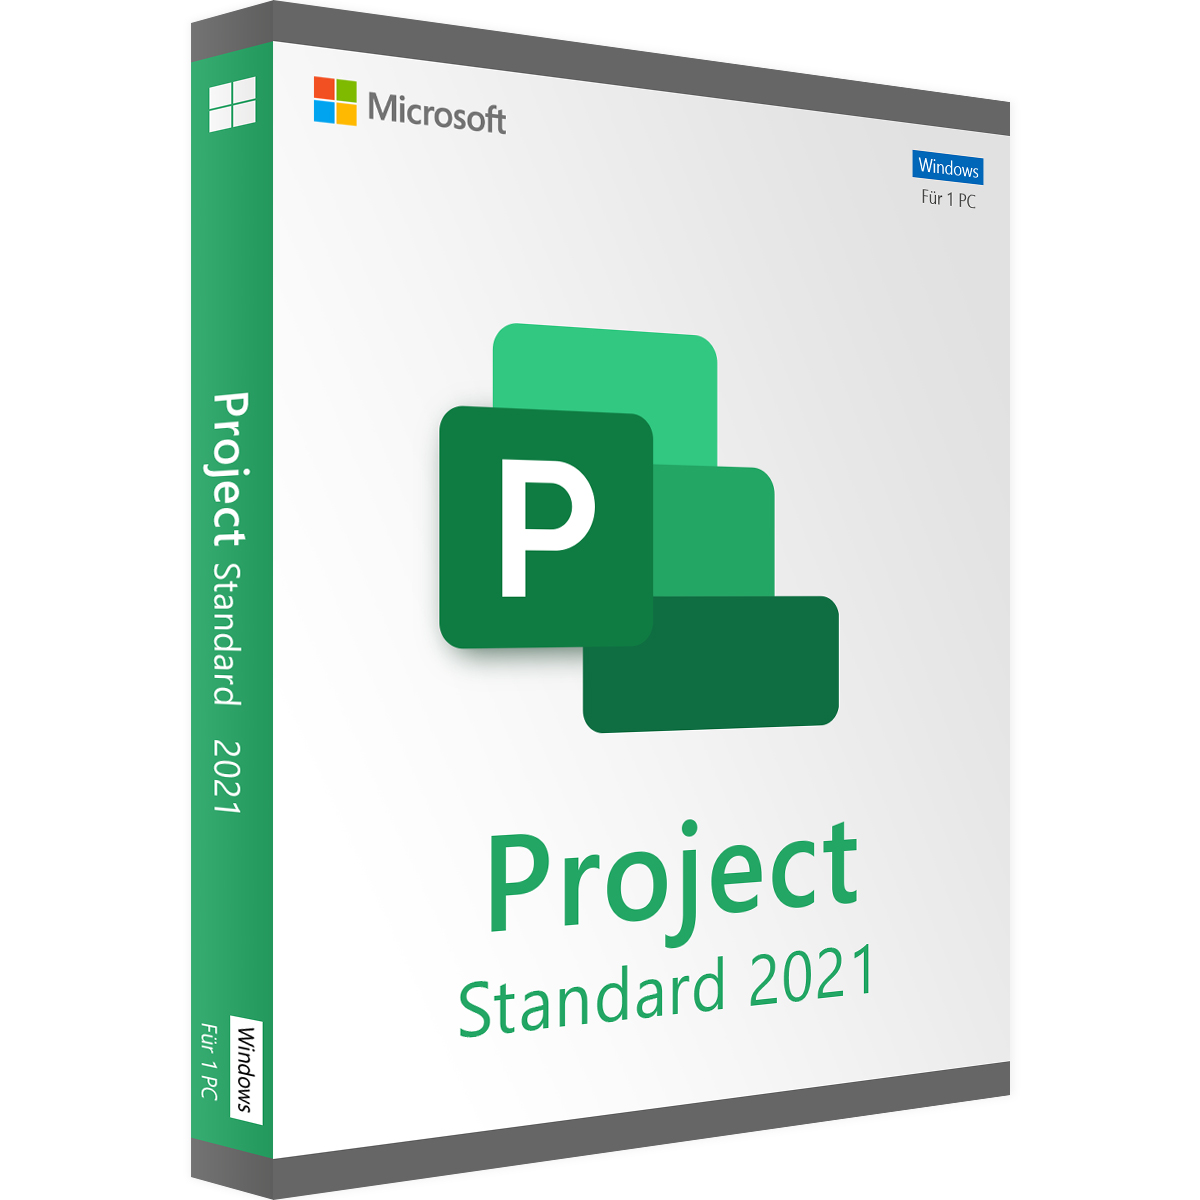 Microsoft Office 2021 v2023.07 Standart / Pro Plus download the new